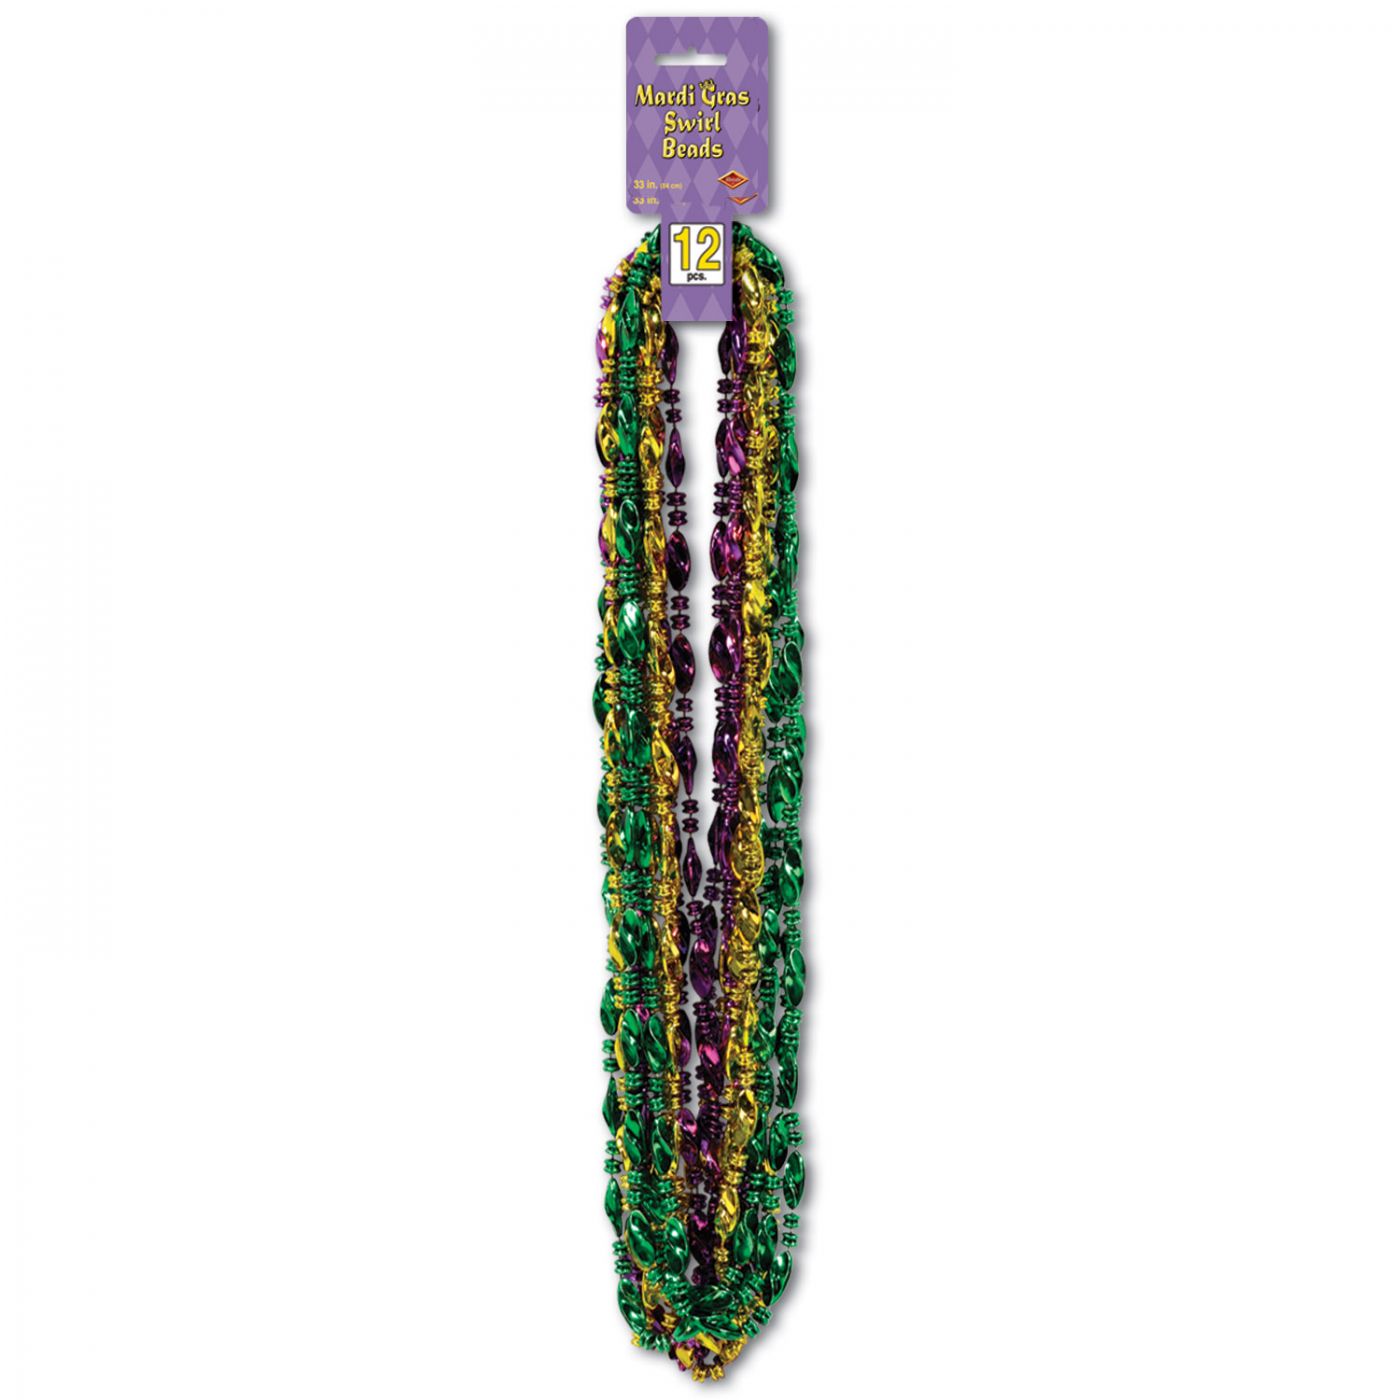 Mardi Gras Swirl Beads (12) image